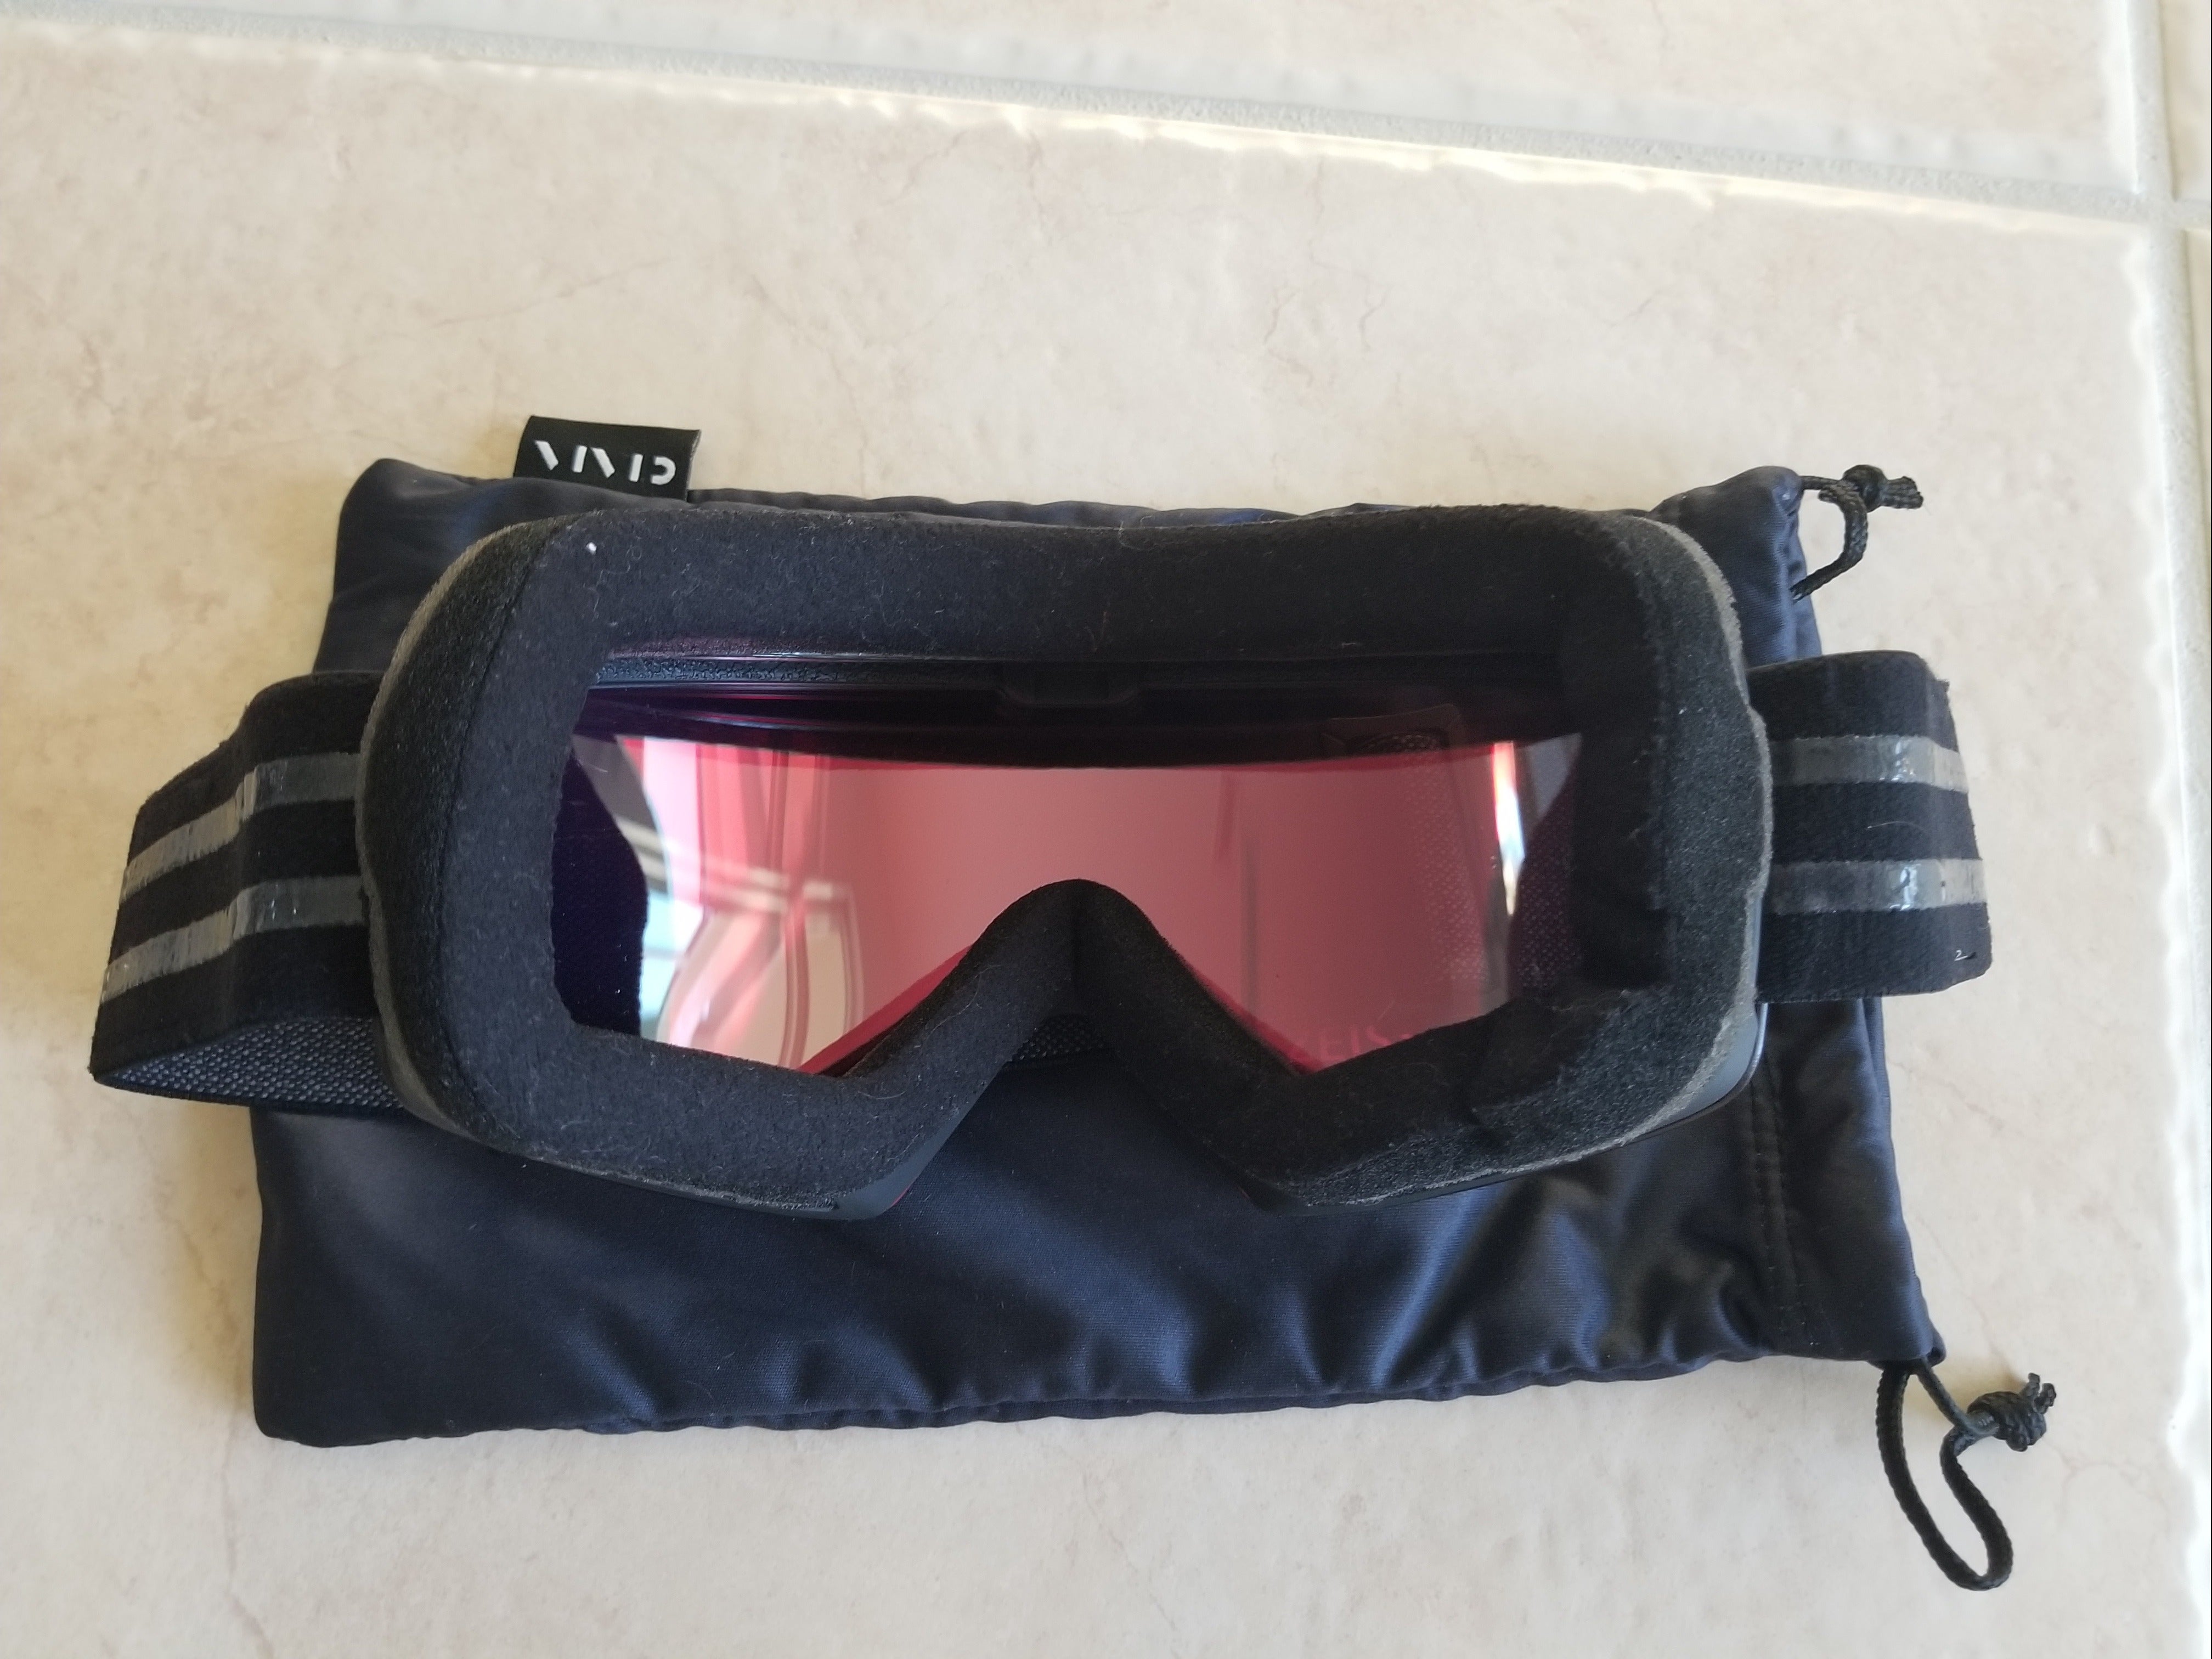 Giro Contour RS Ski Goggles, Adult Medium/Large fit | SidelineSwap